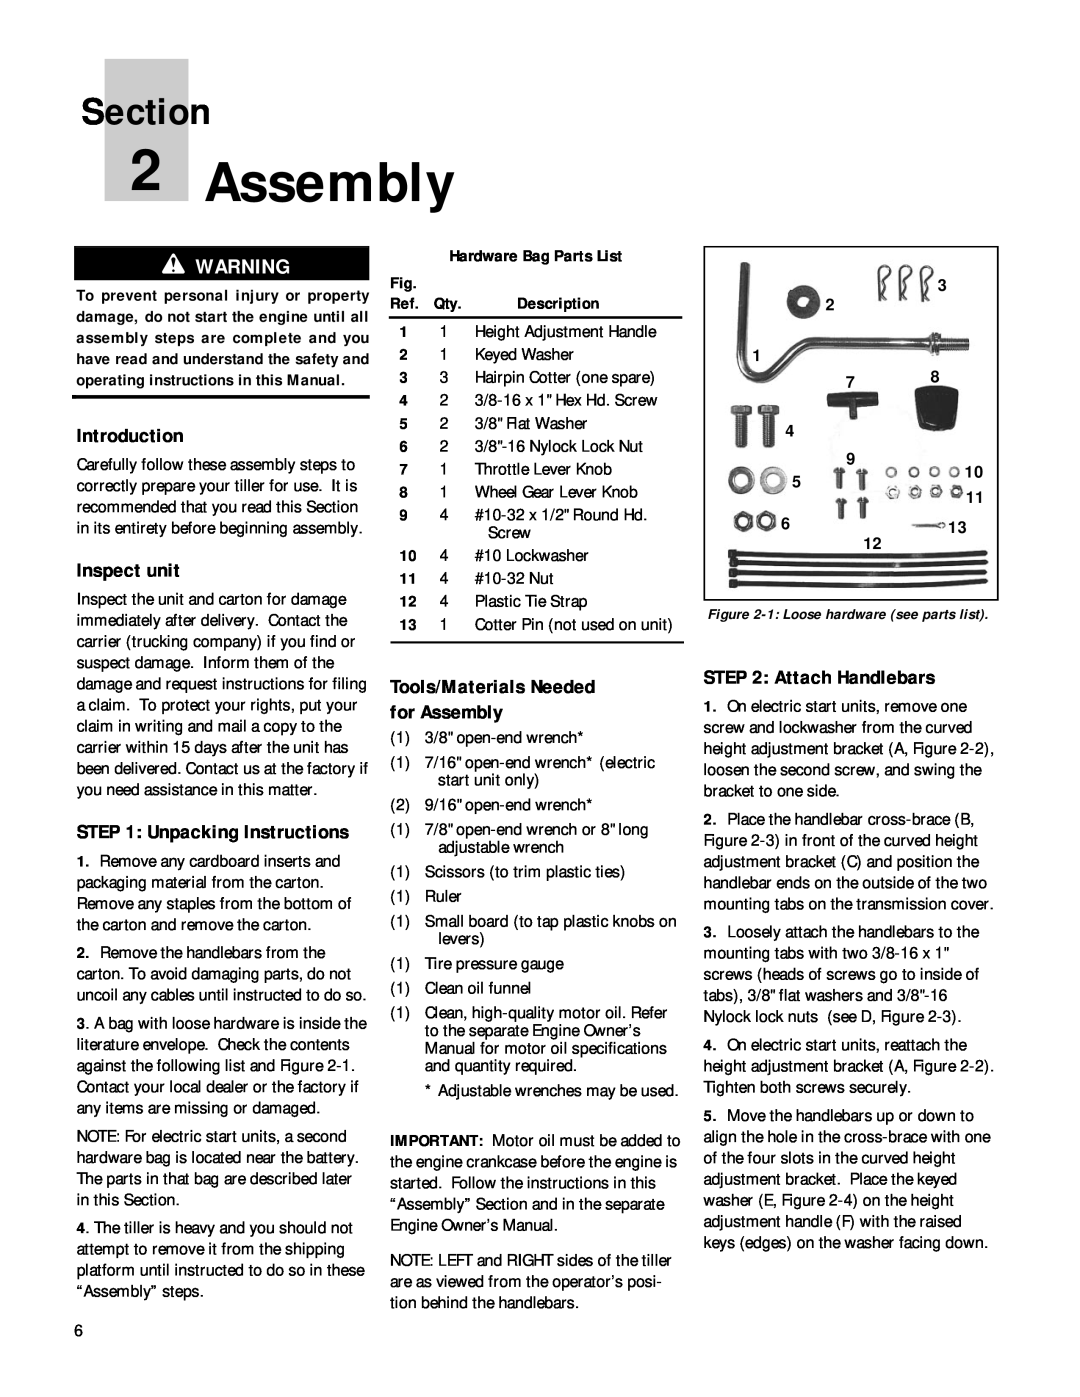 Troy-Bilt 12212 Assembly, Introduction, Inspect unit, Attach Handlebars, Unpacking Instructions, Hardware Bag Parts List 